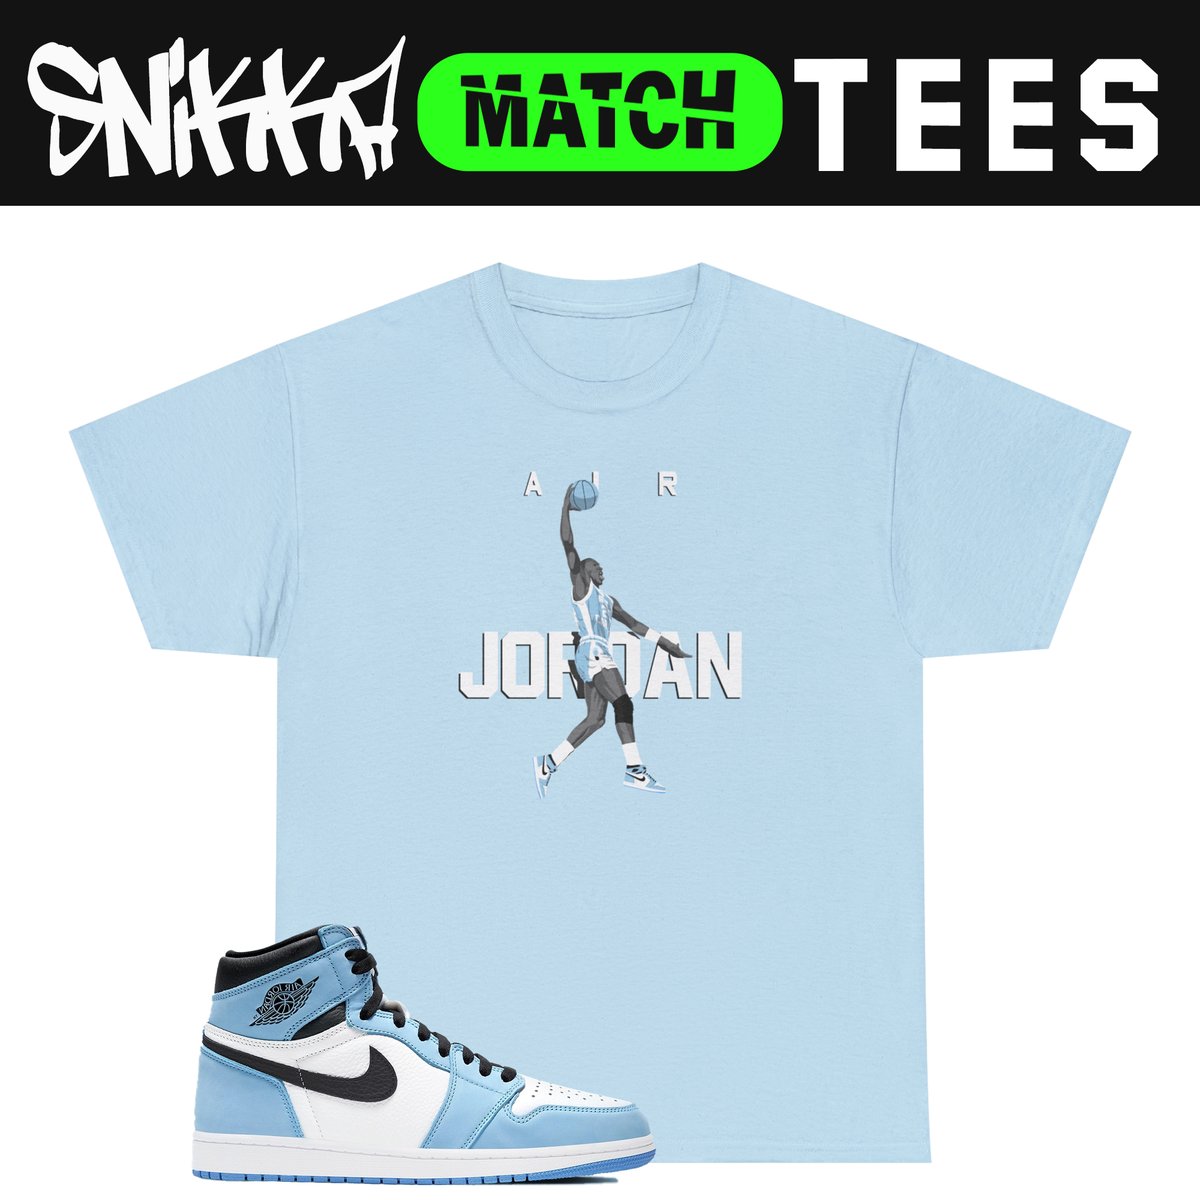 Shirt To Match The Jordan 1 UNC University Blue | Michael Jordan Retro Vector Digital Graphic | Fans Gift MJ North Carolina Basketball Tee https://t.co/RCi11n4VYJ via @Etsy #snikkamatchtees #sneakerhead #sneakers #AirJordan #AirJordan1 #michaeljordan #NorthCarolina #Retro #tshirt https://t.co/vS44cGPsR7